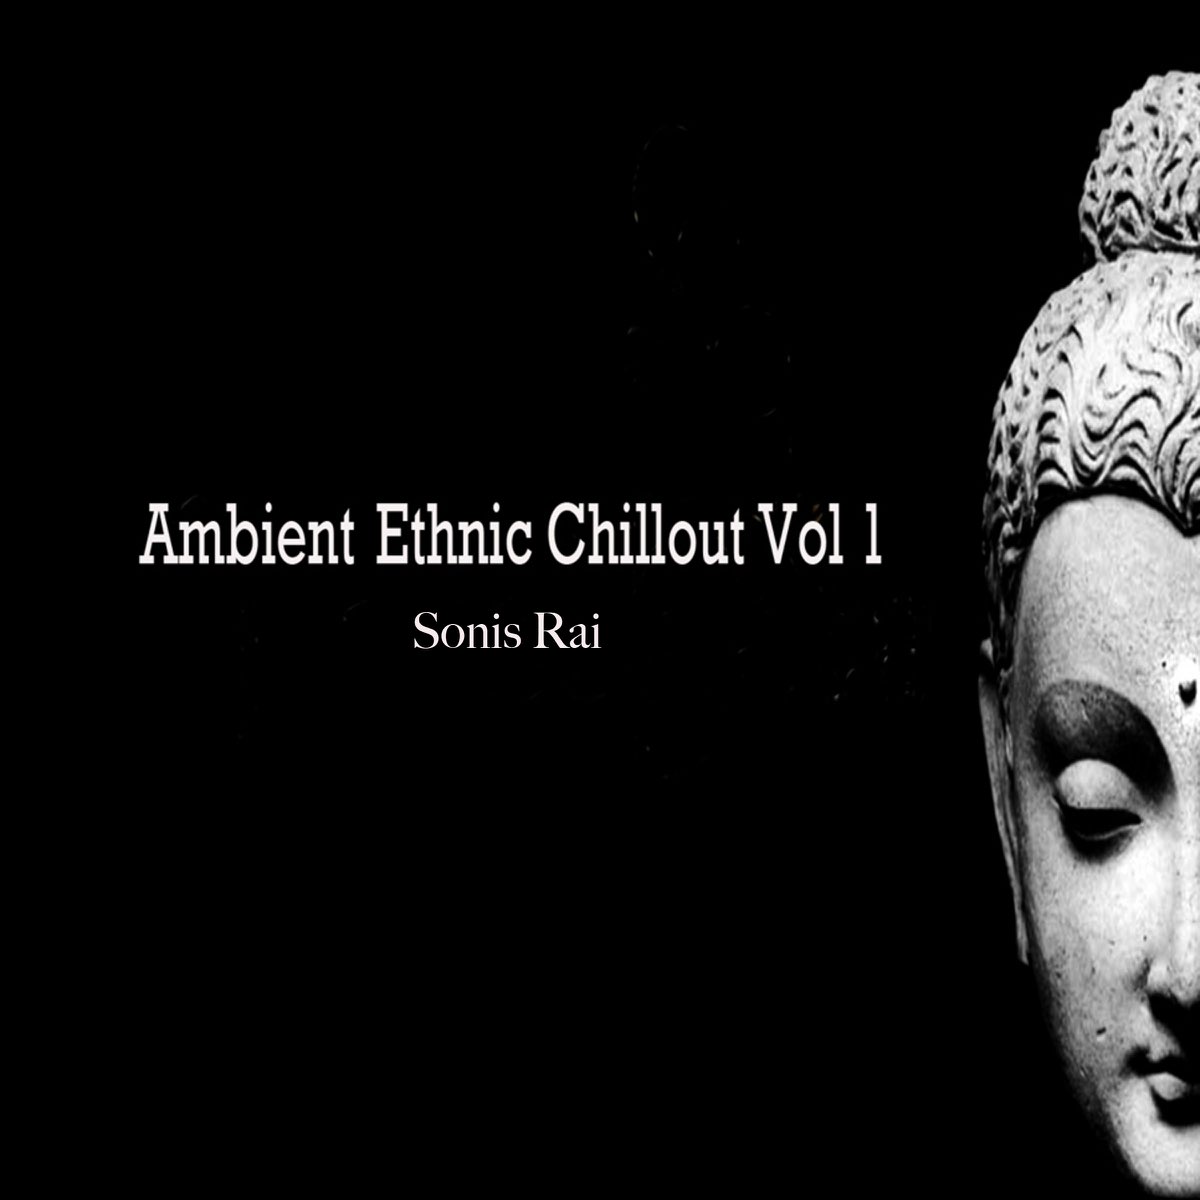 Chillout Vol 1. Ethnic chill